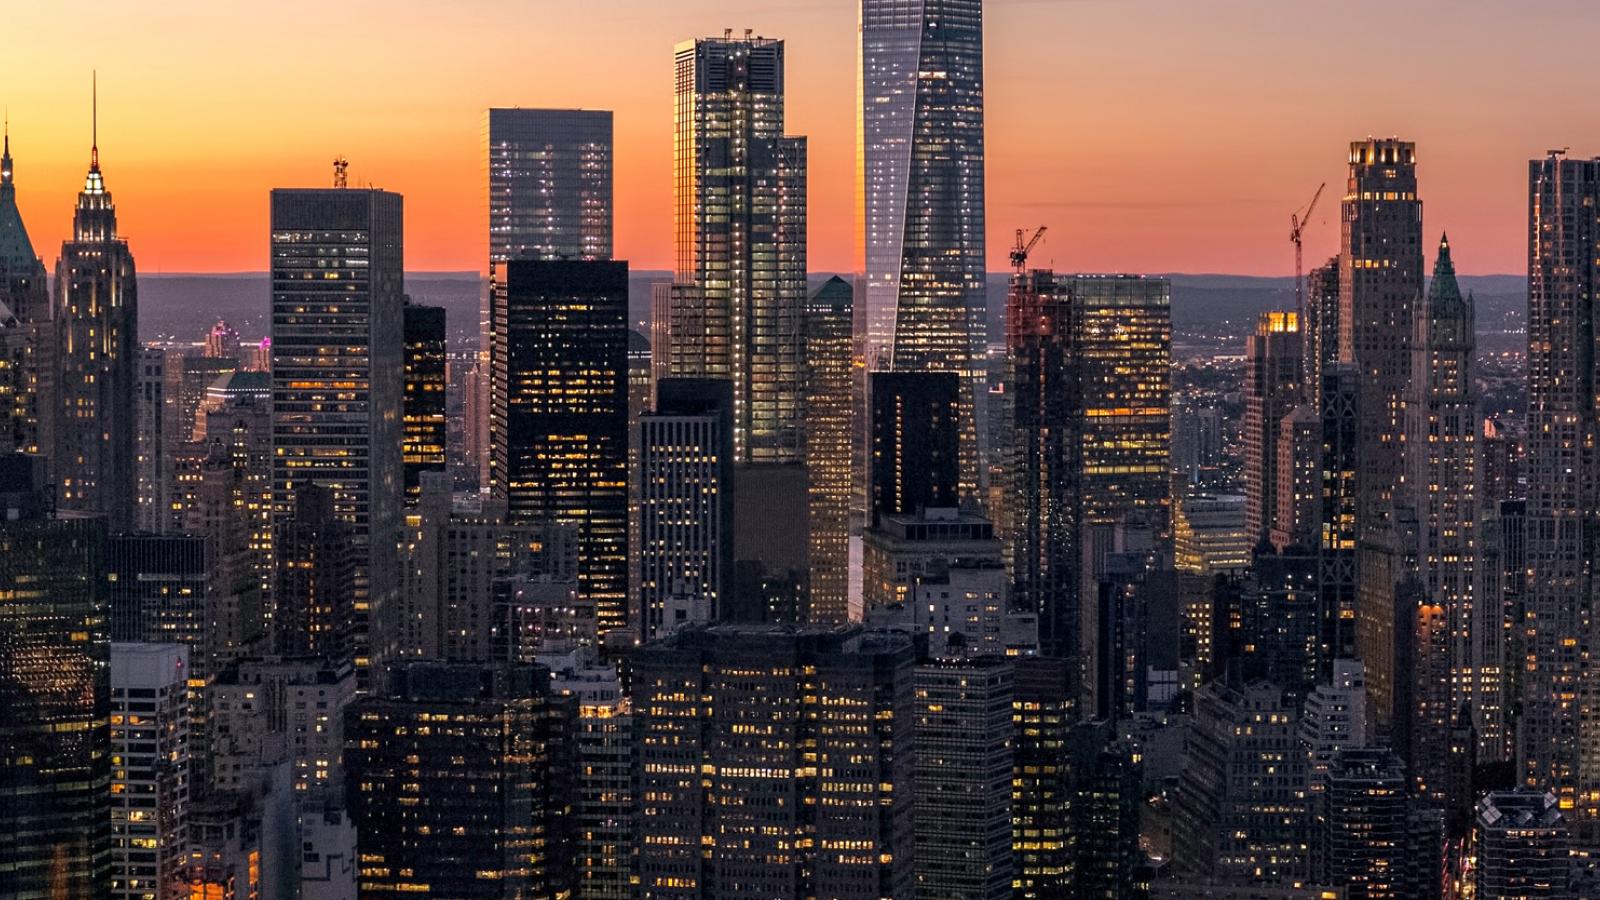 Skyline of NYC.